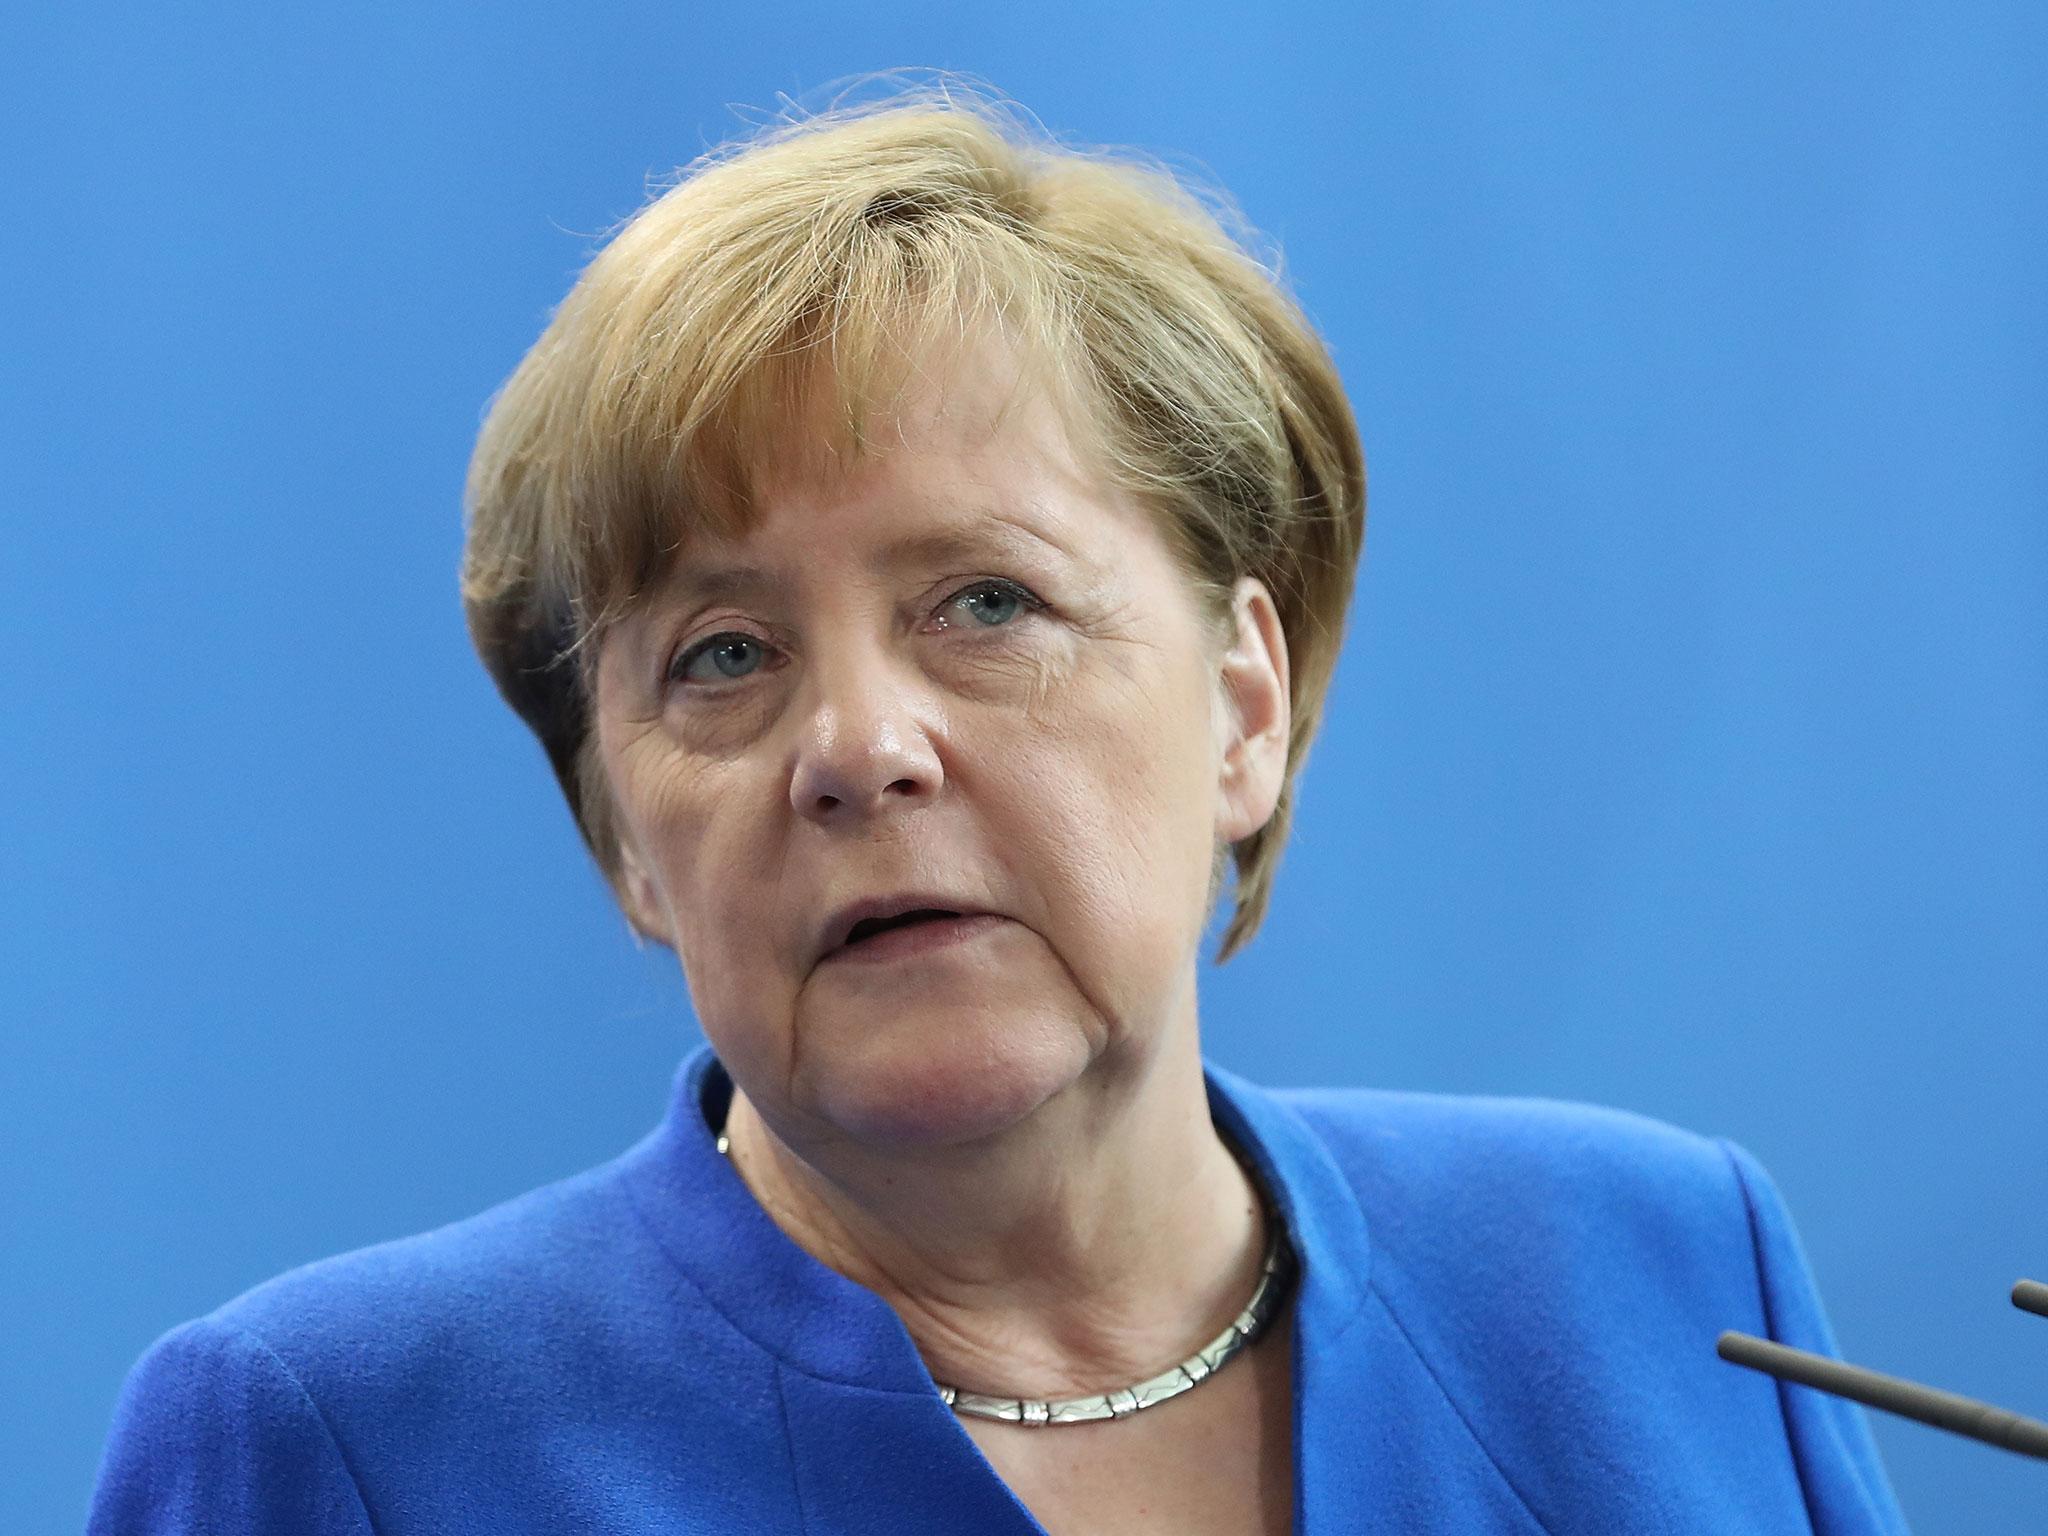 Angela Merkel condemned the violence through a spokesperson